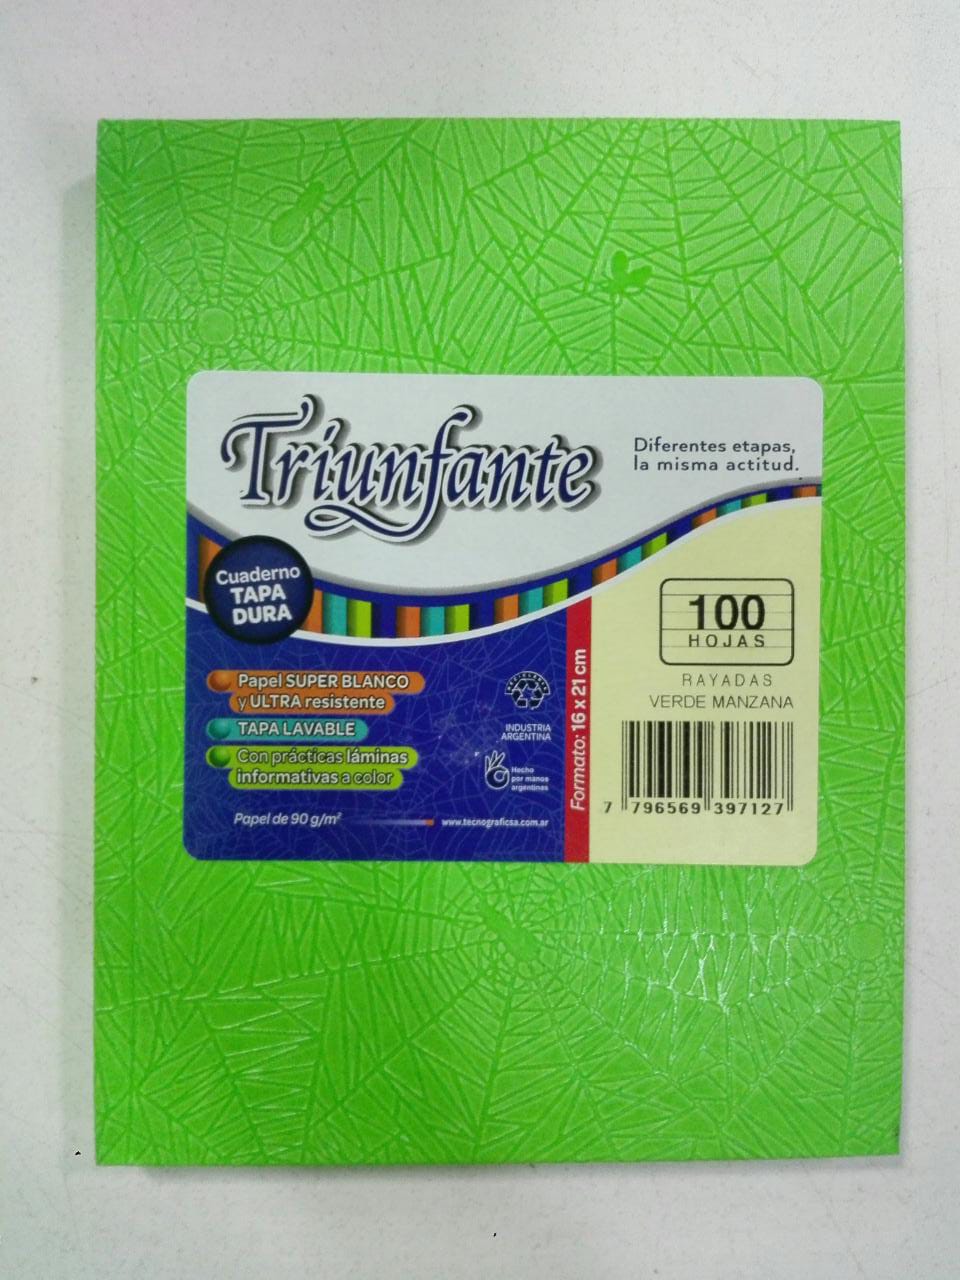 Cuaderno nro1 triunfante verde manzana x 100 h rayas